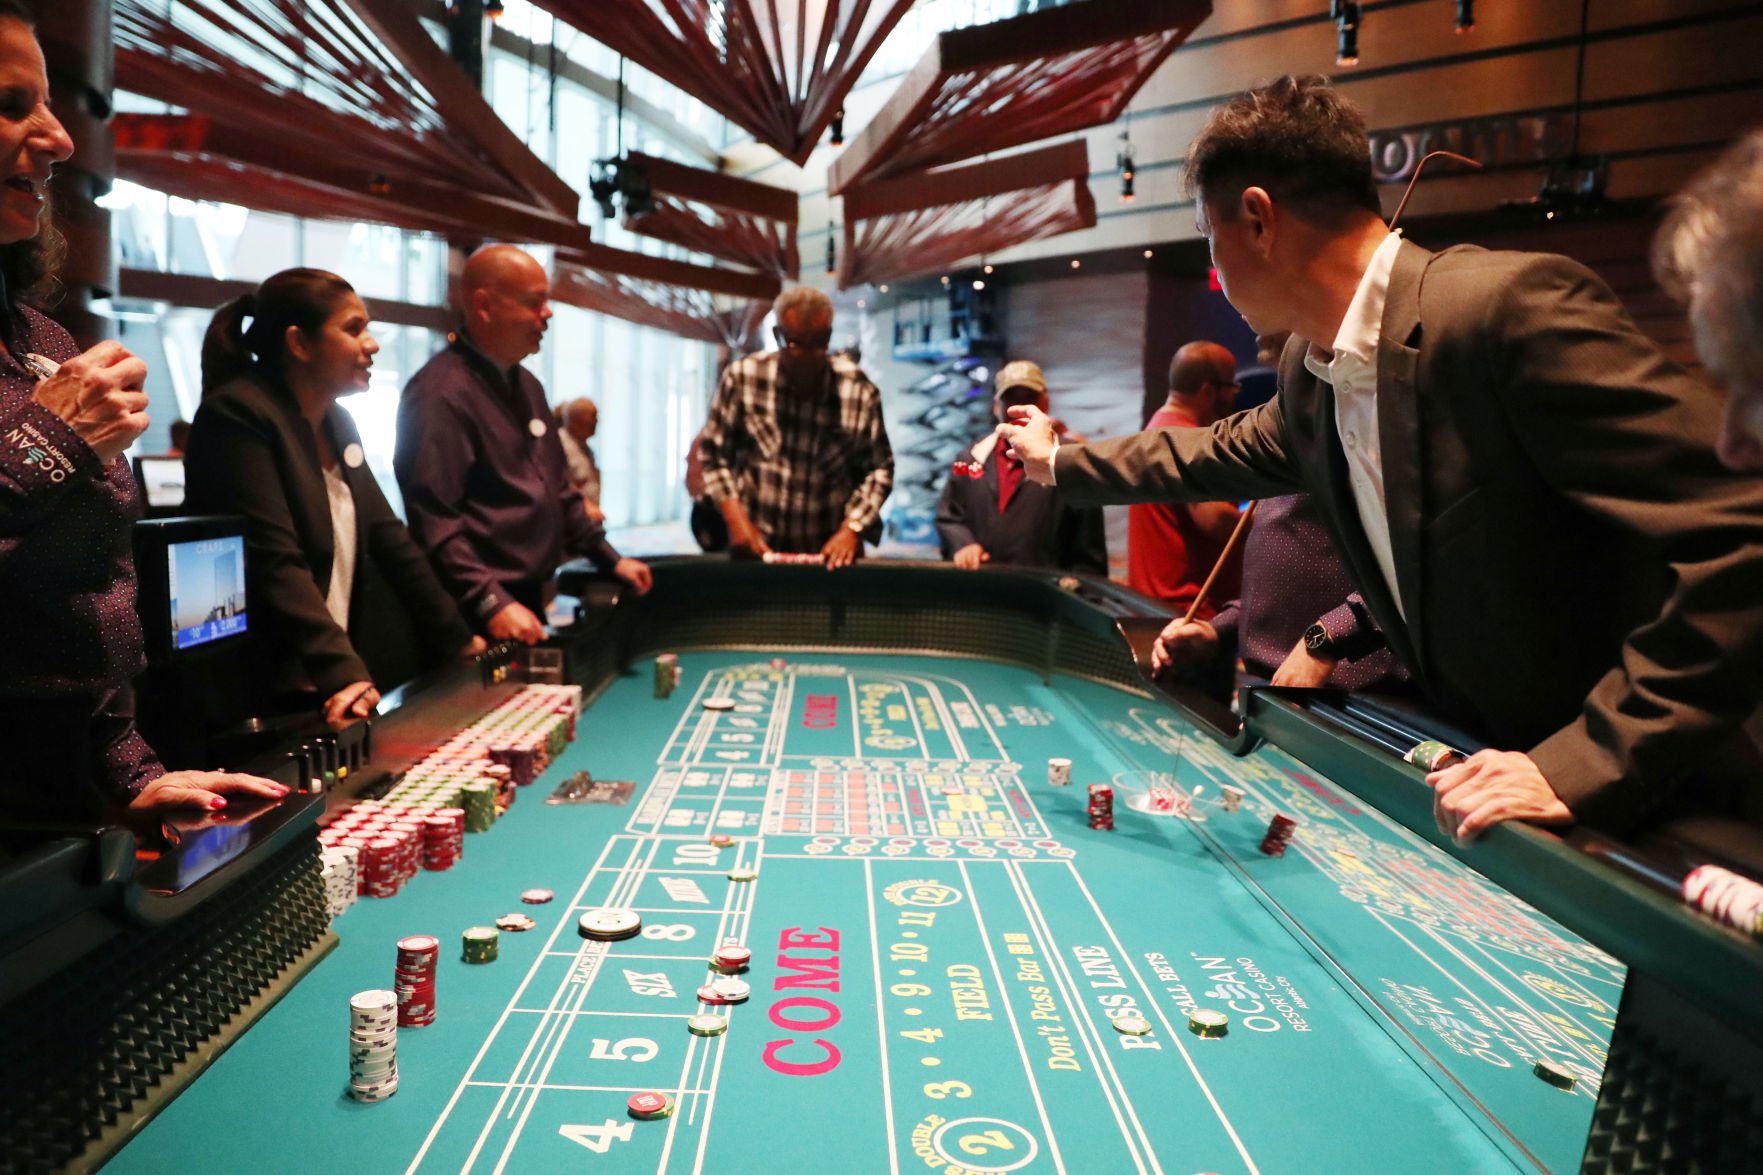 ocean casino downs table games 2018